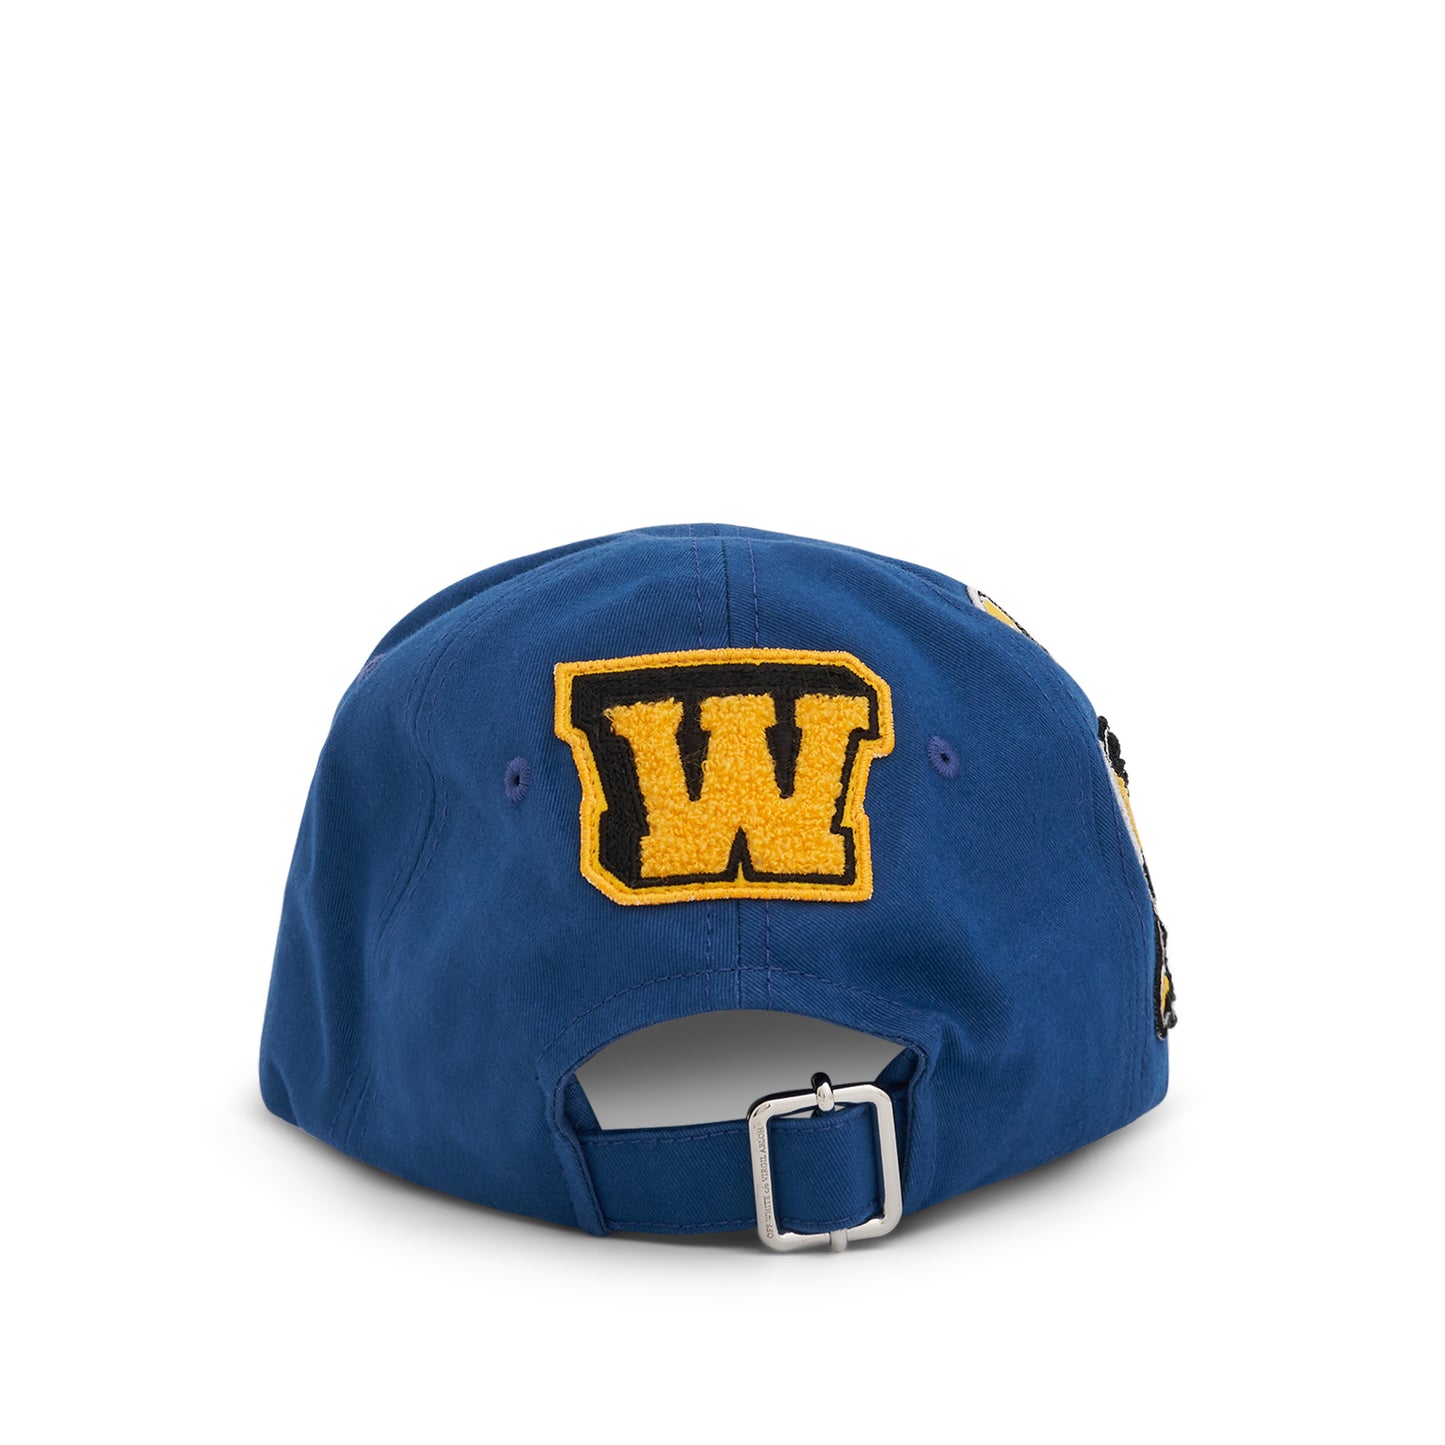 World Varsity Baseball Cap in Blue/Yellow